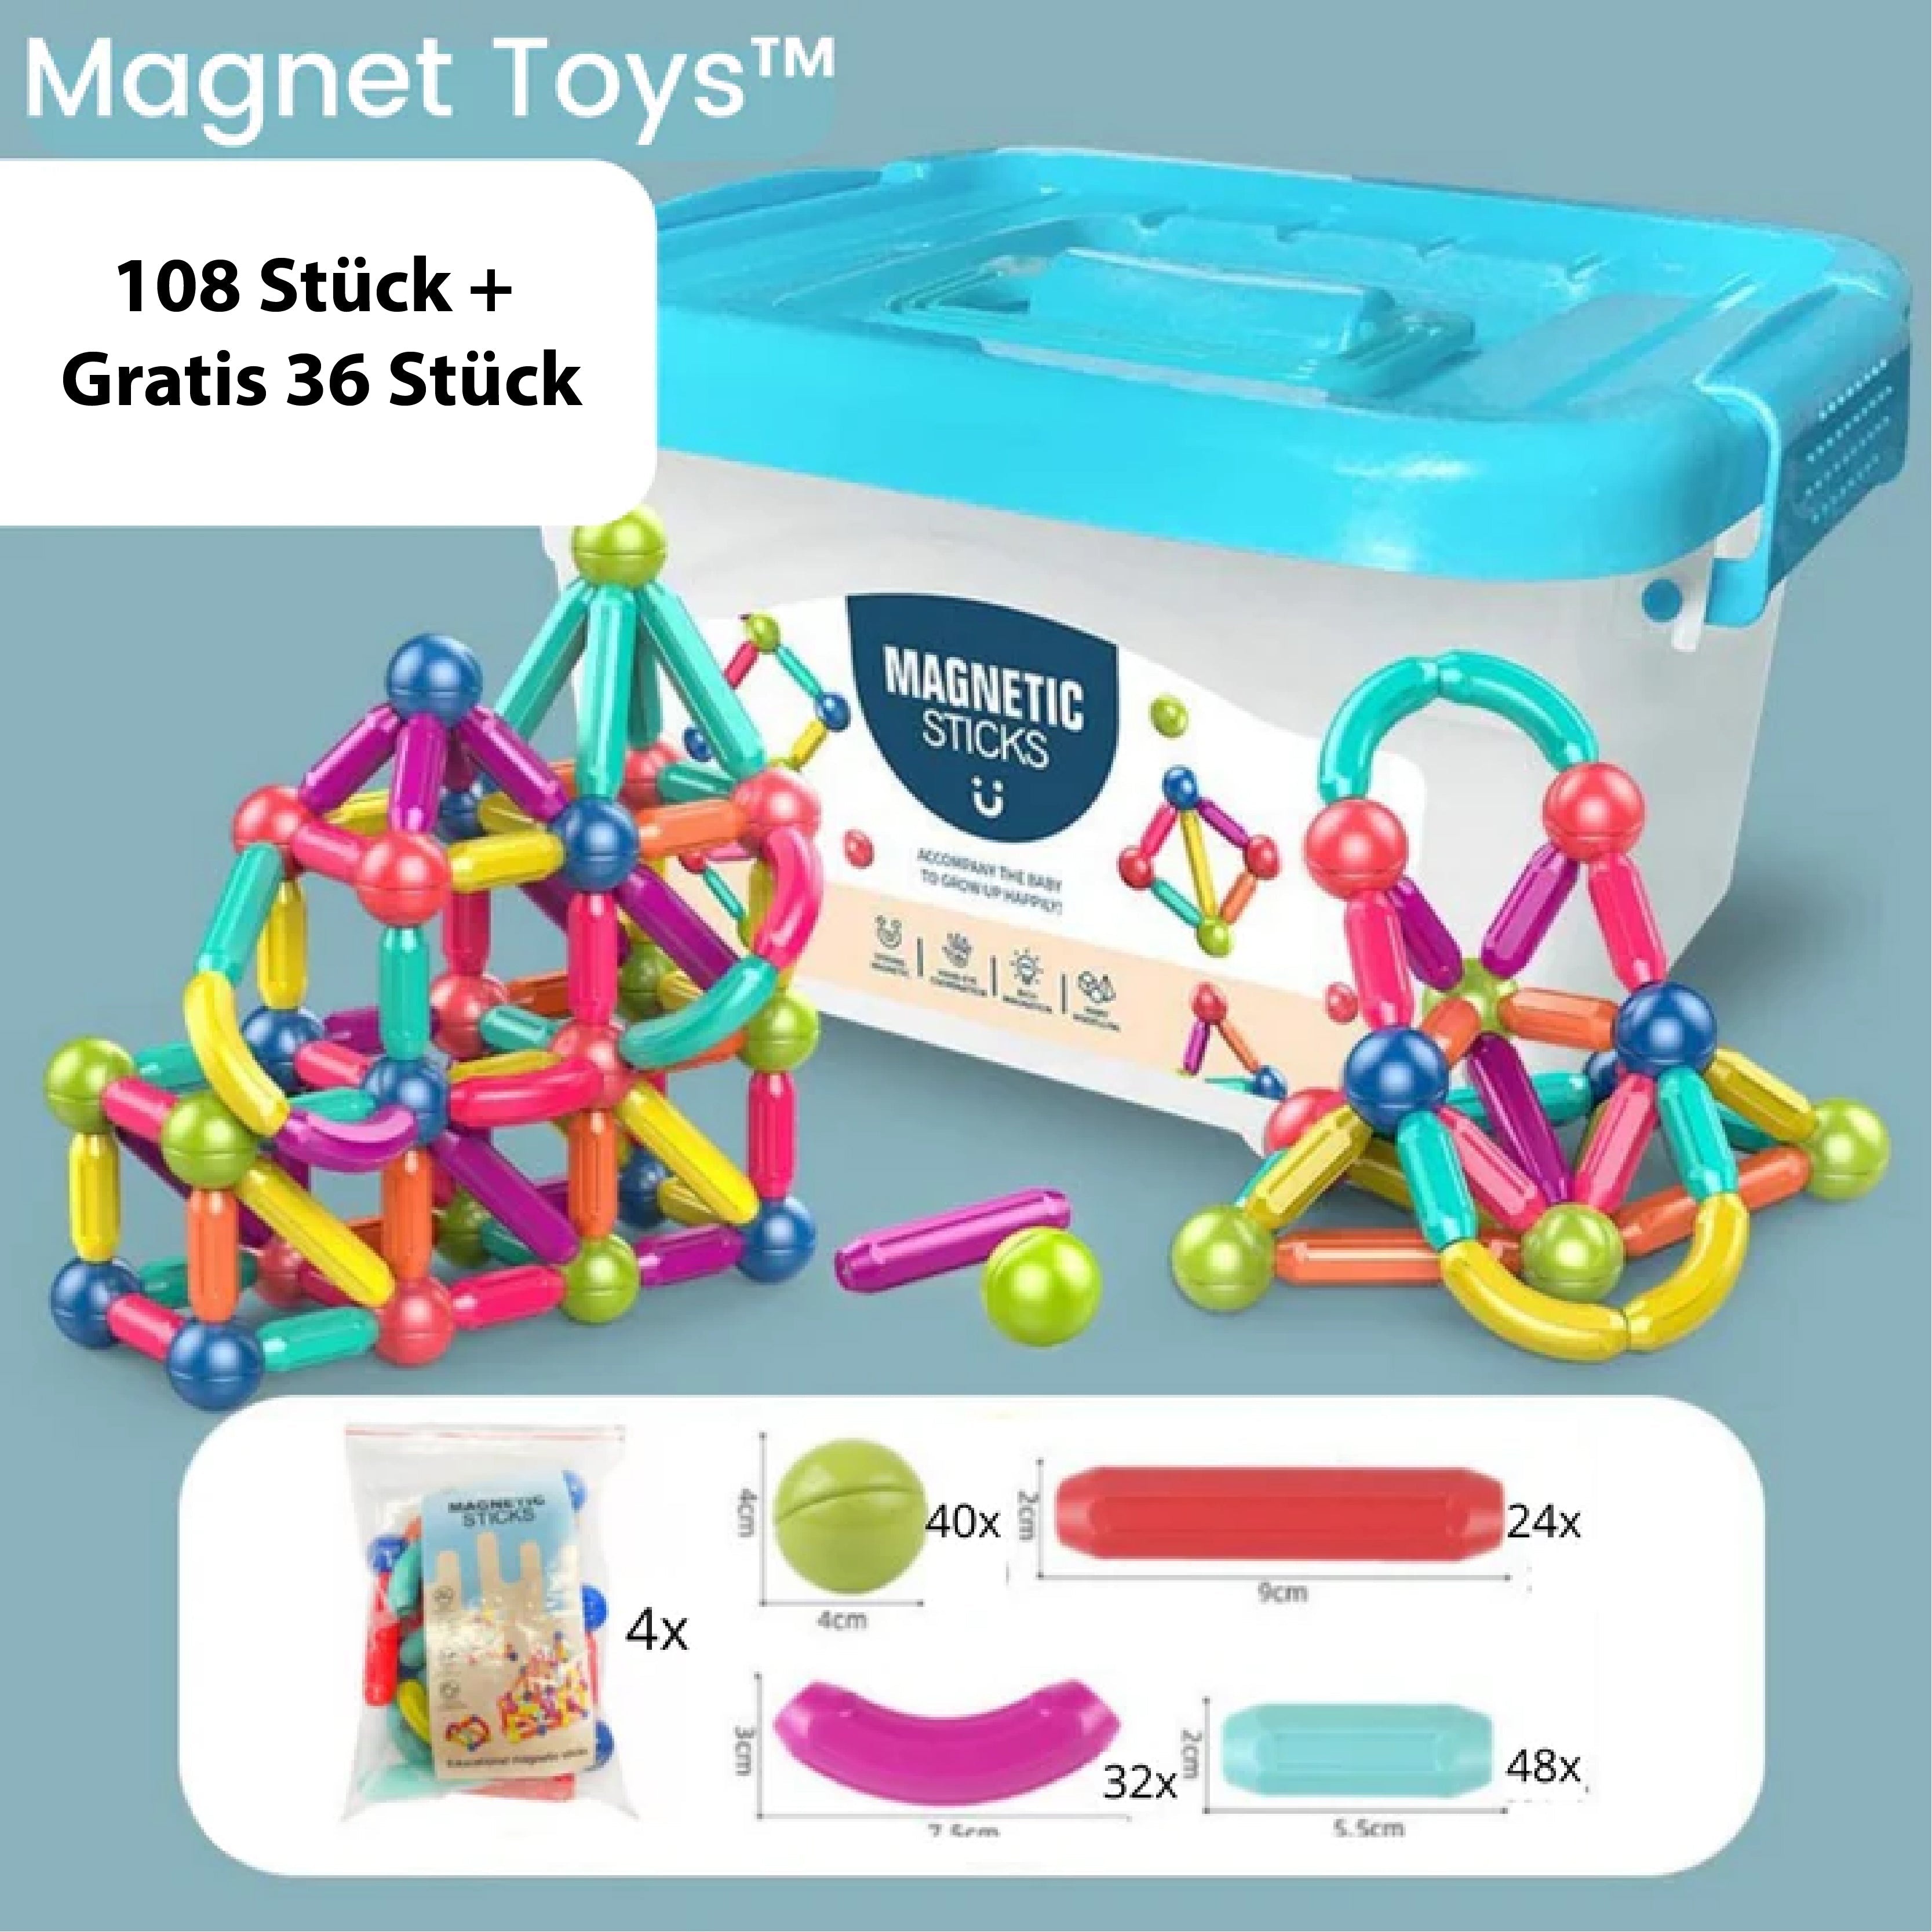 MAGNET TOYS™ - Kreativität entwickeln - Magnetsticks